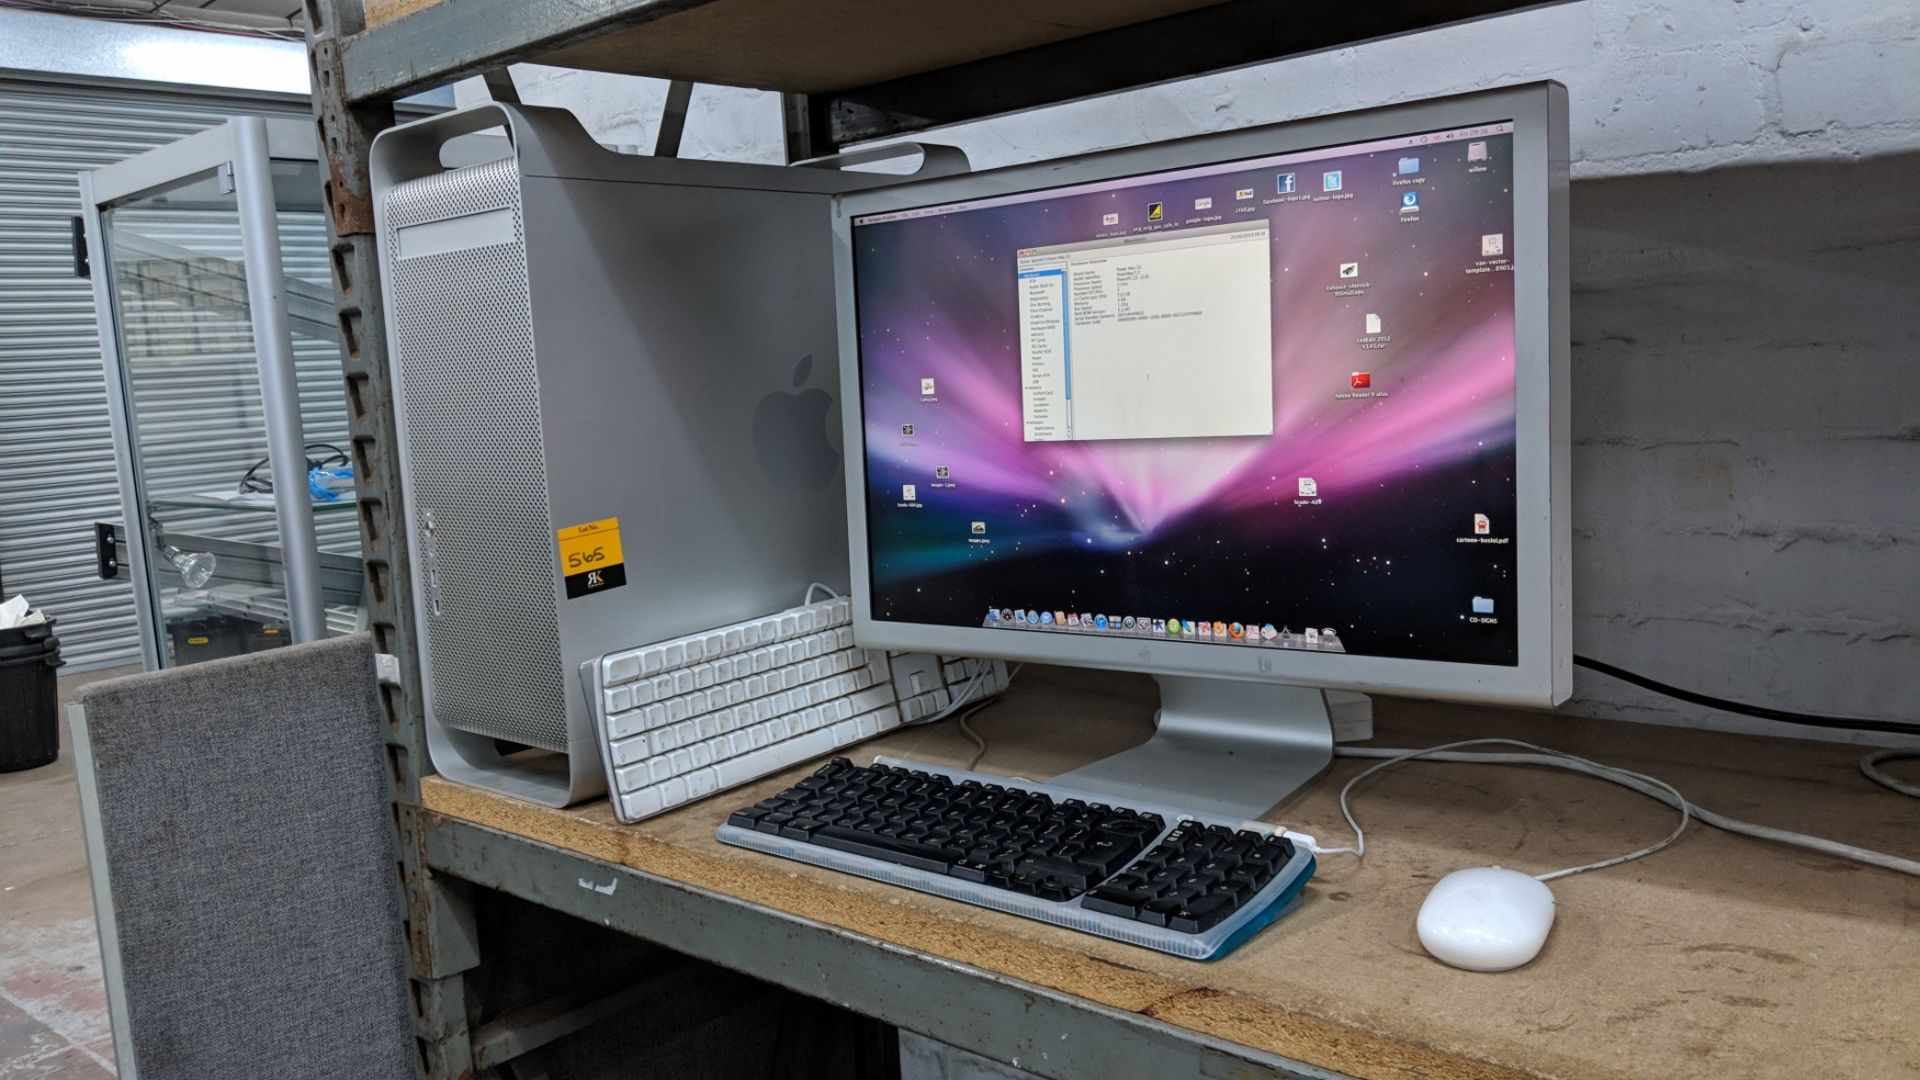 Apple PowerMac G5 model A1047 EMC number 2061 desktop computer, with 2GHz processor, 160Gb hard